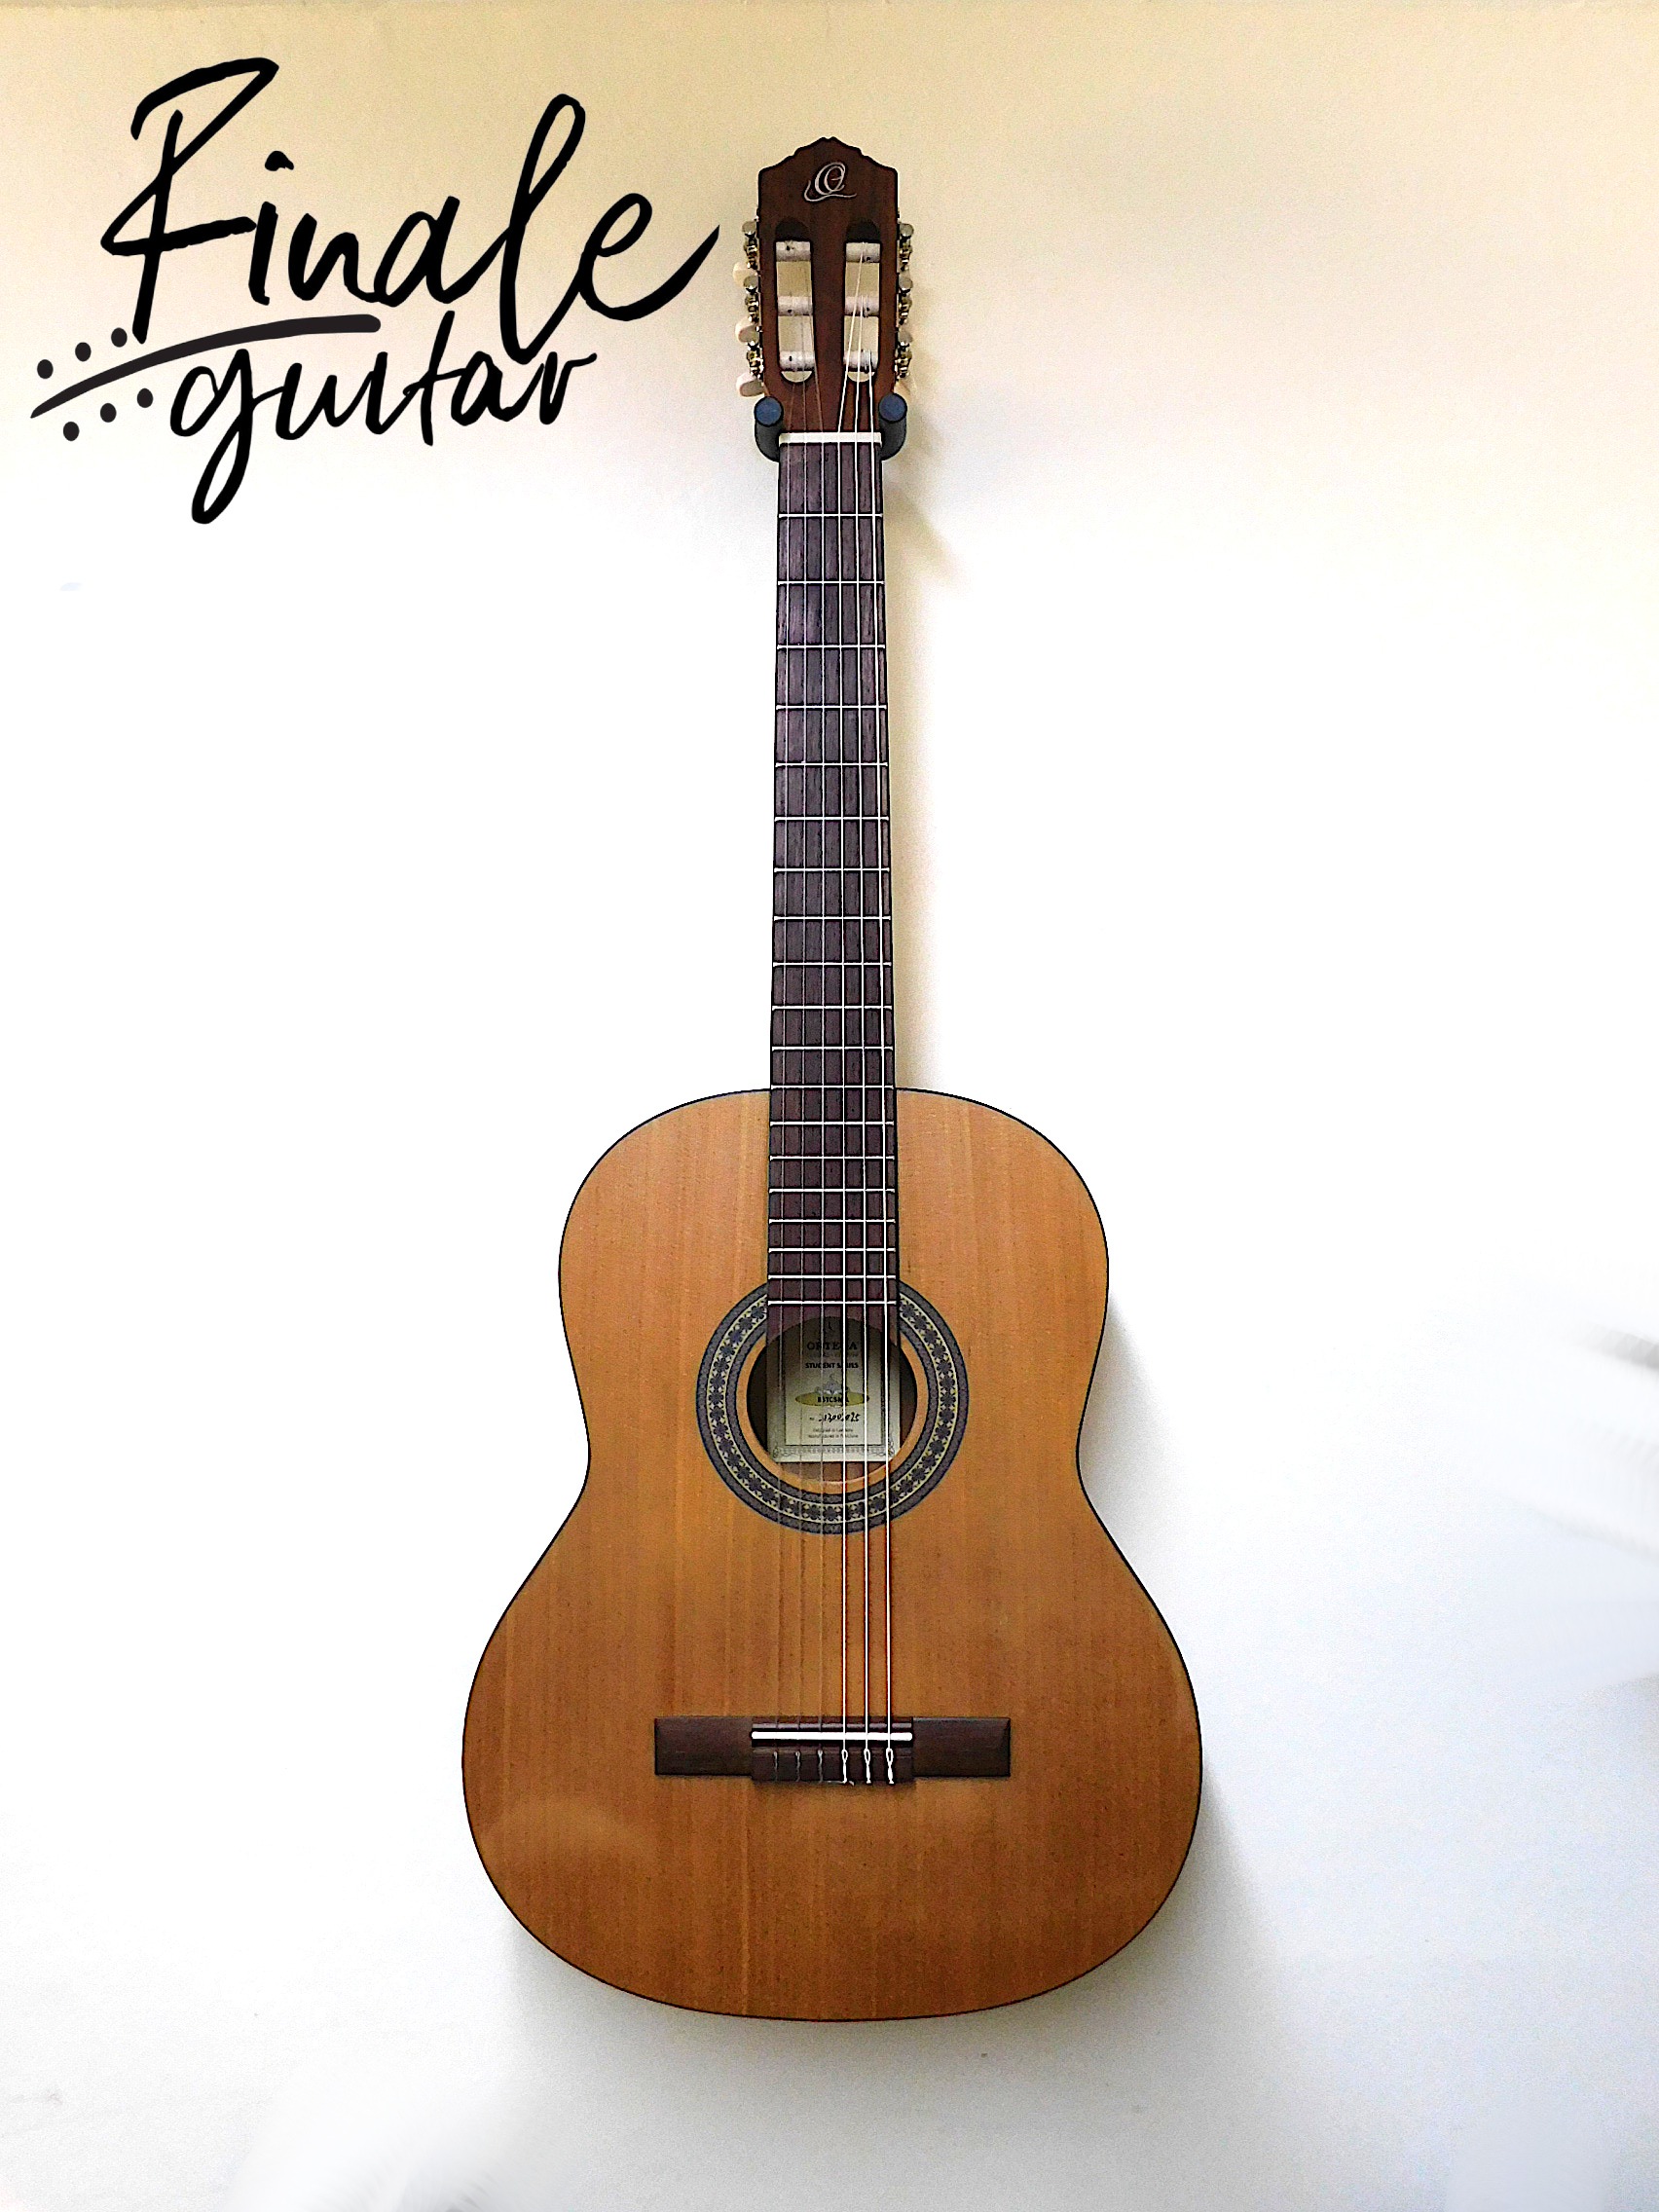 Ortega left handed classical for sale in our Sheffield Guitar shop, Finale Guitar